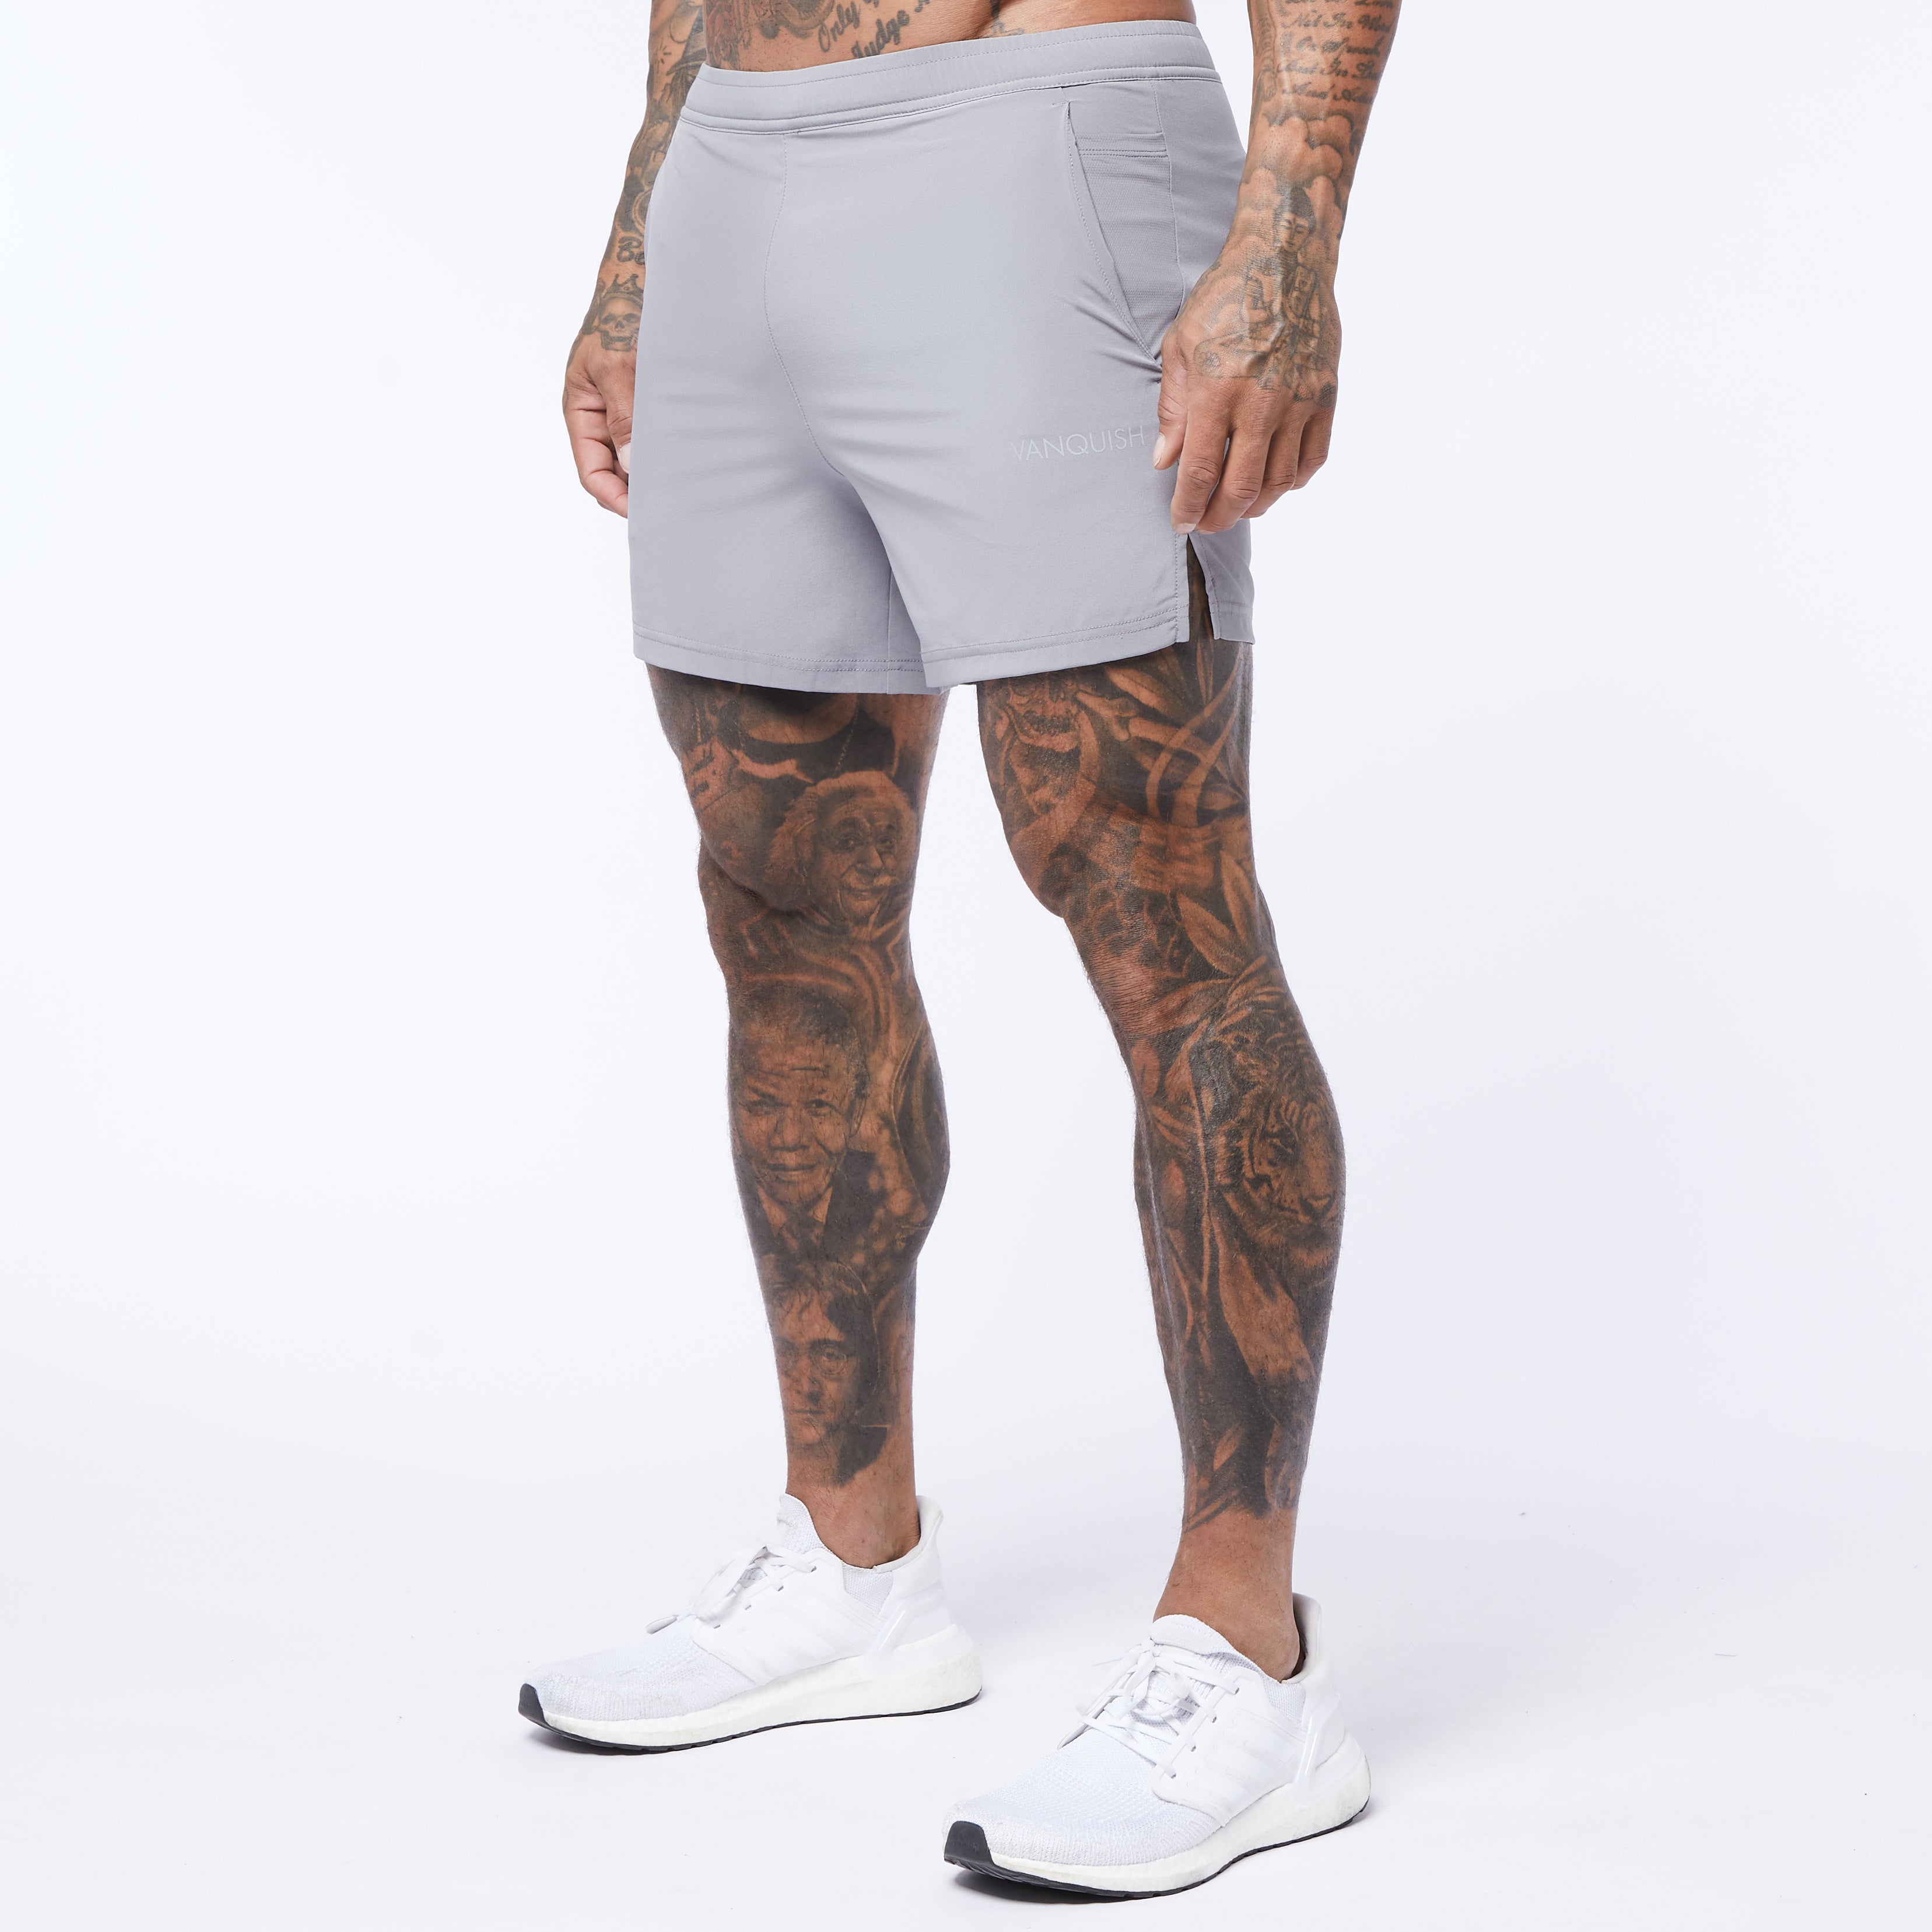 Vanquish Core Performance Grey Shorts